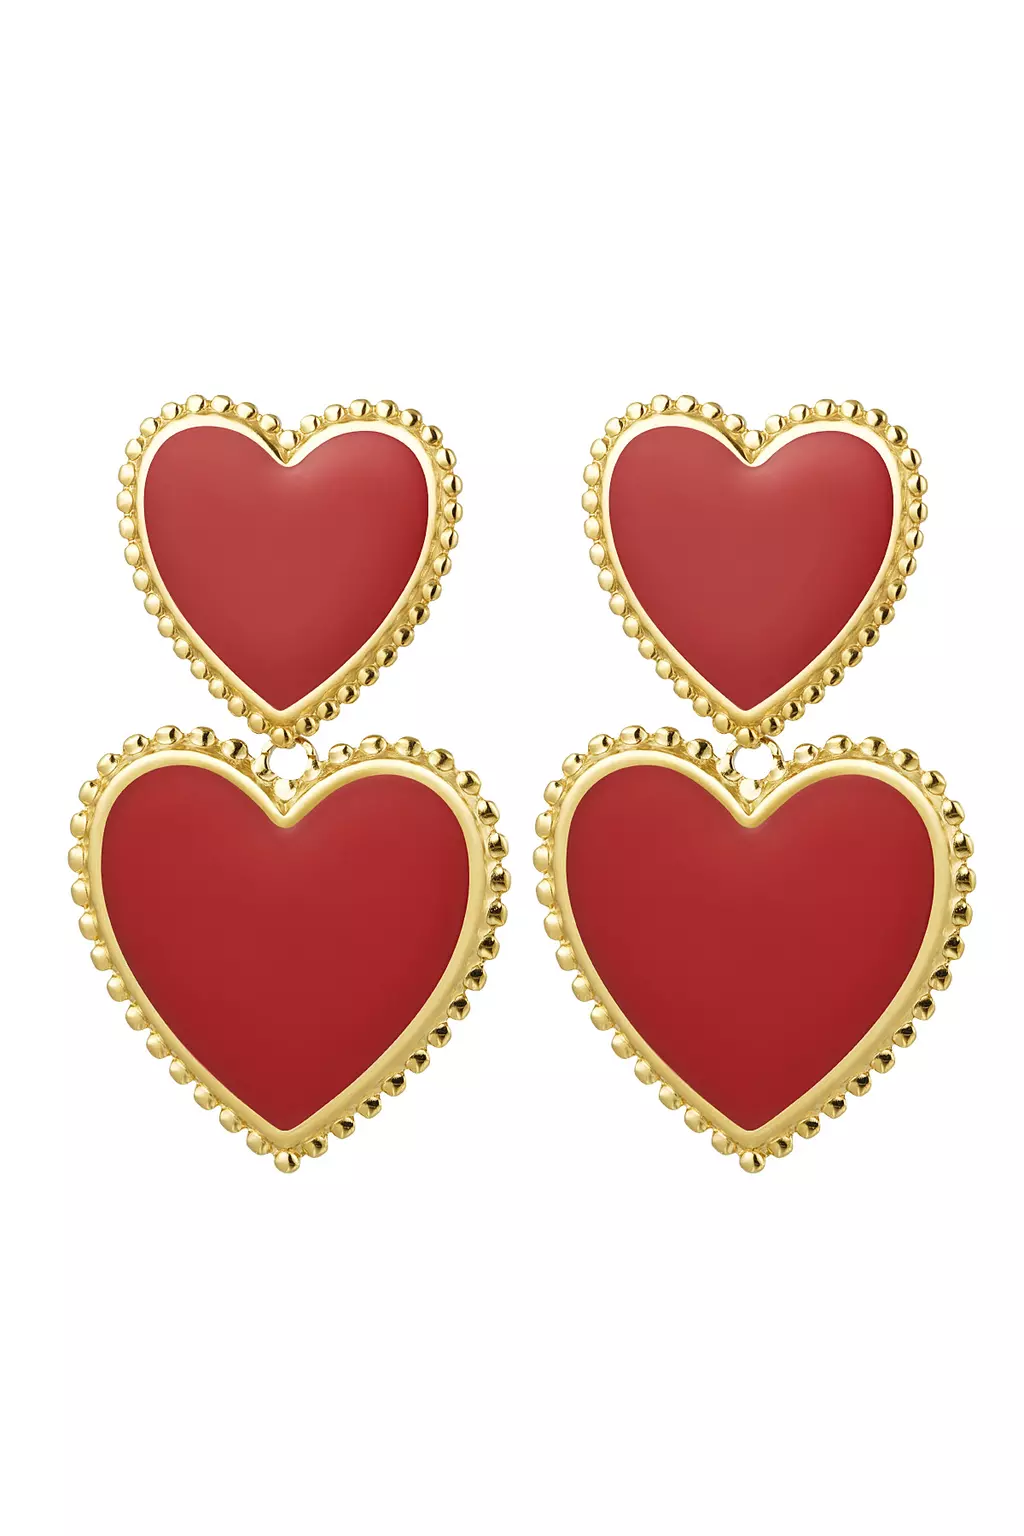 Dubbel heart rood oorbellen - fanciy.nl - 18K - gold plated - nikkel vrij - waterproof - goud - rood - redt - earrings - gold - oorbellen - heart - hart - statement - valentijn - r